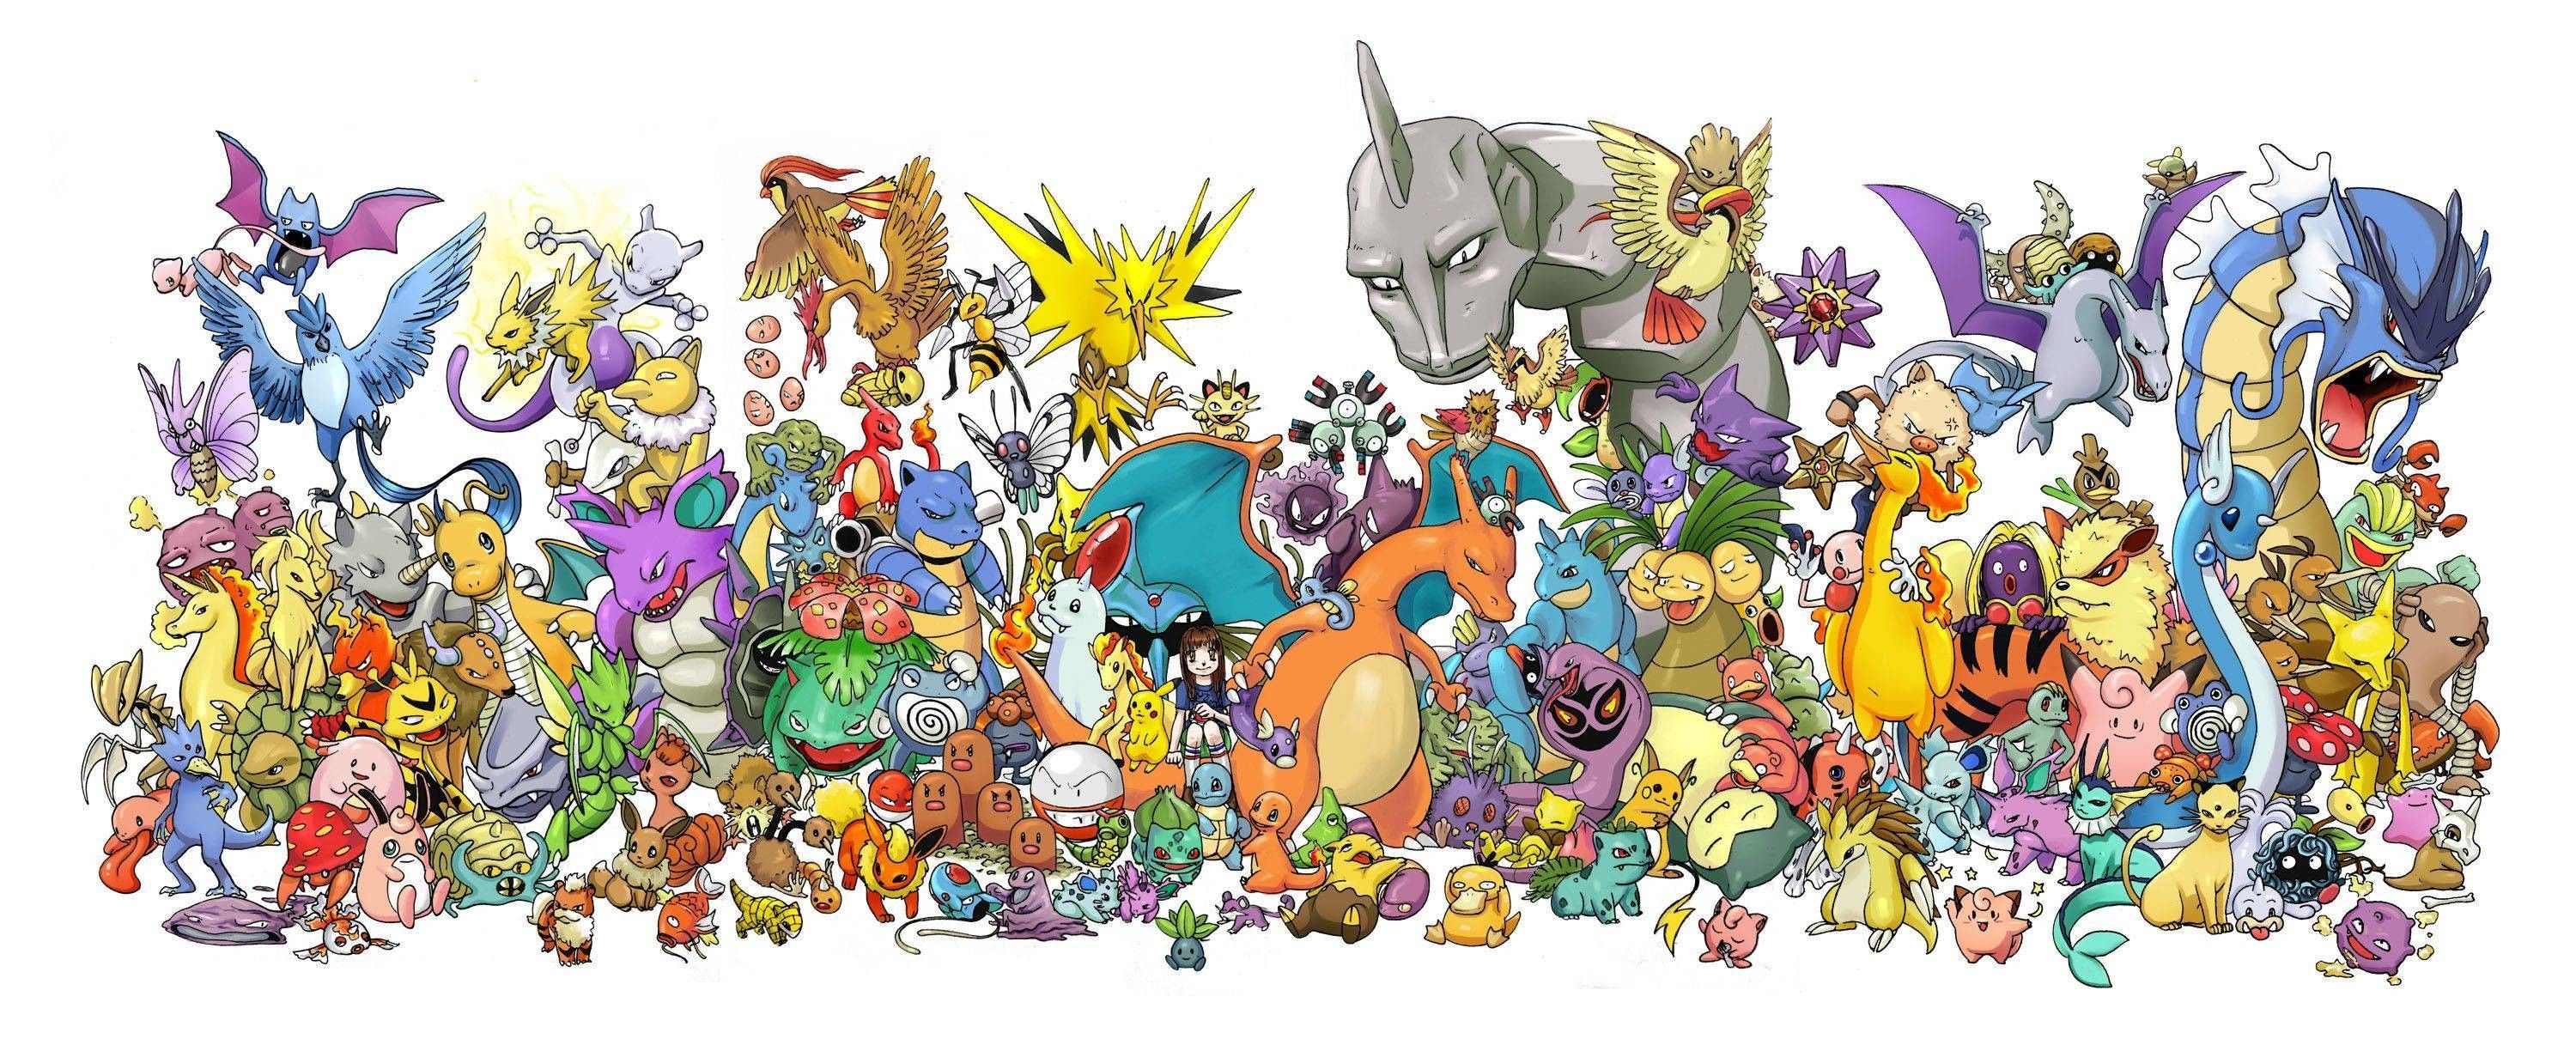 Wallpaper For > Original 151 Pokemon Wallpaper All Wallpaper & Background Download